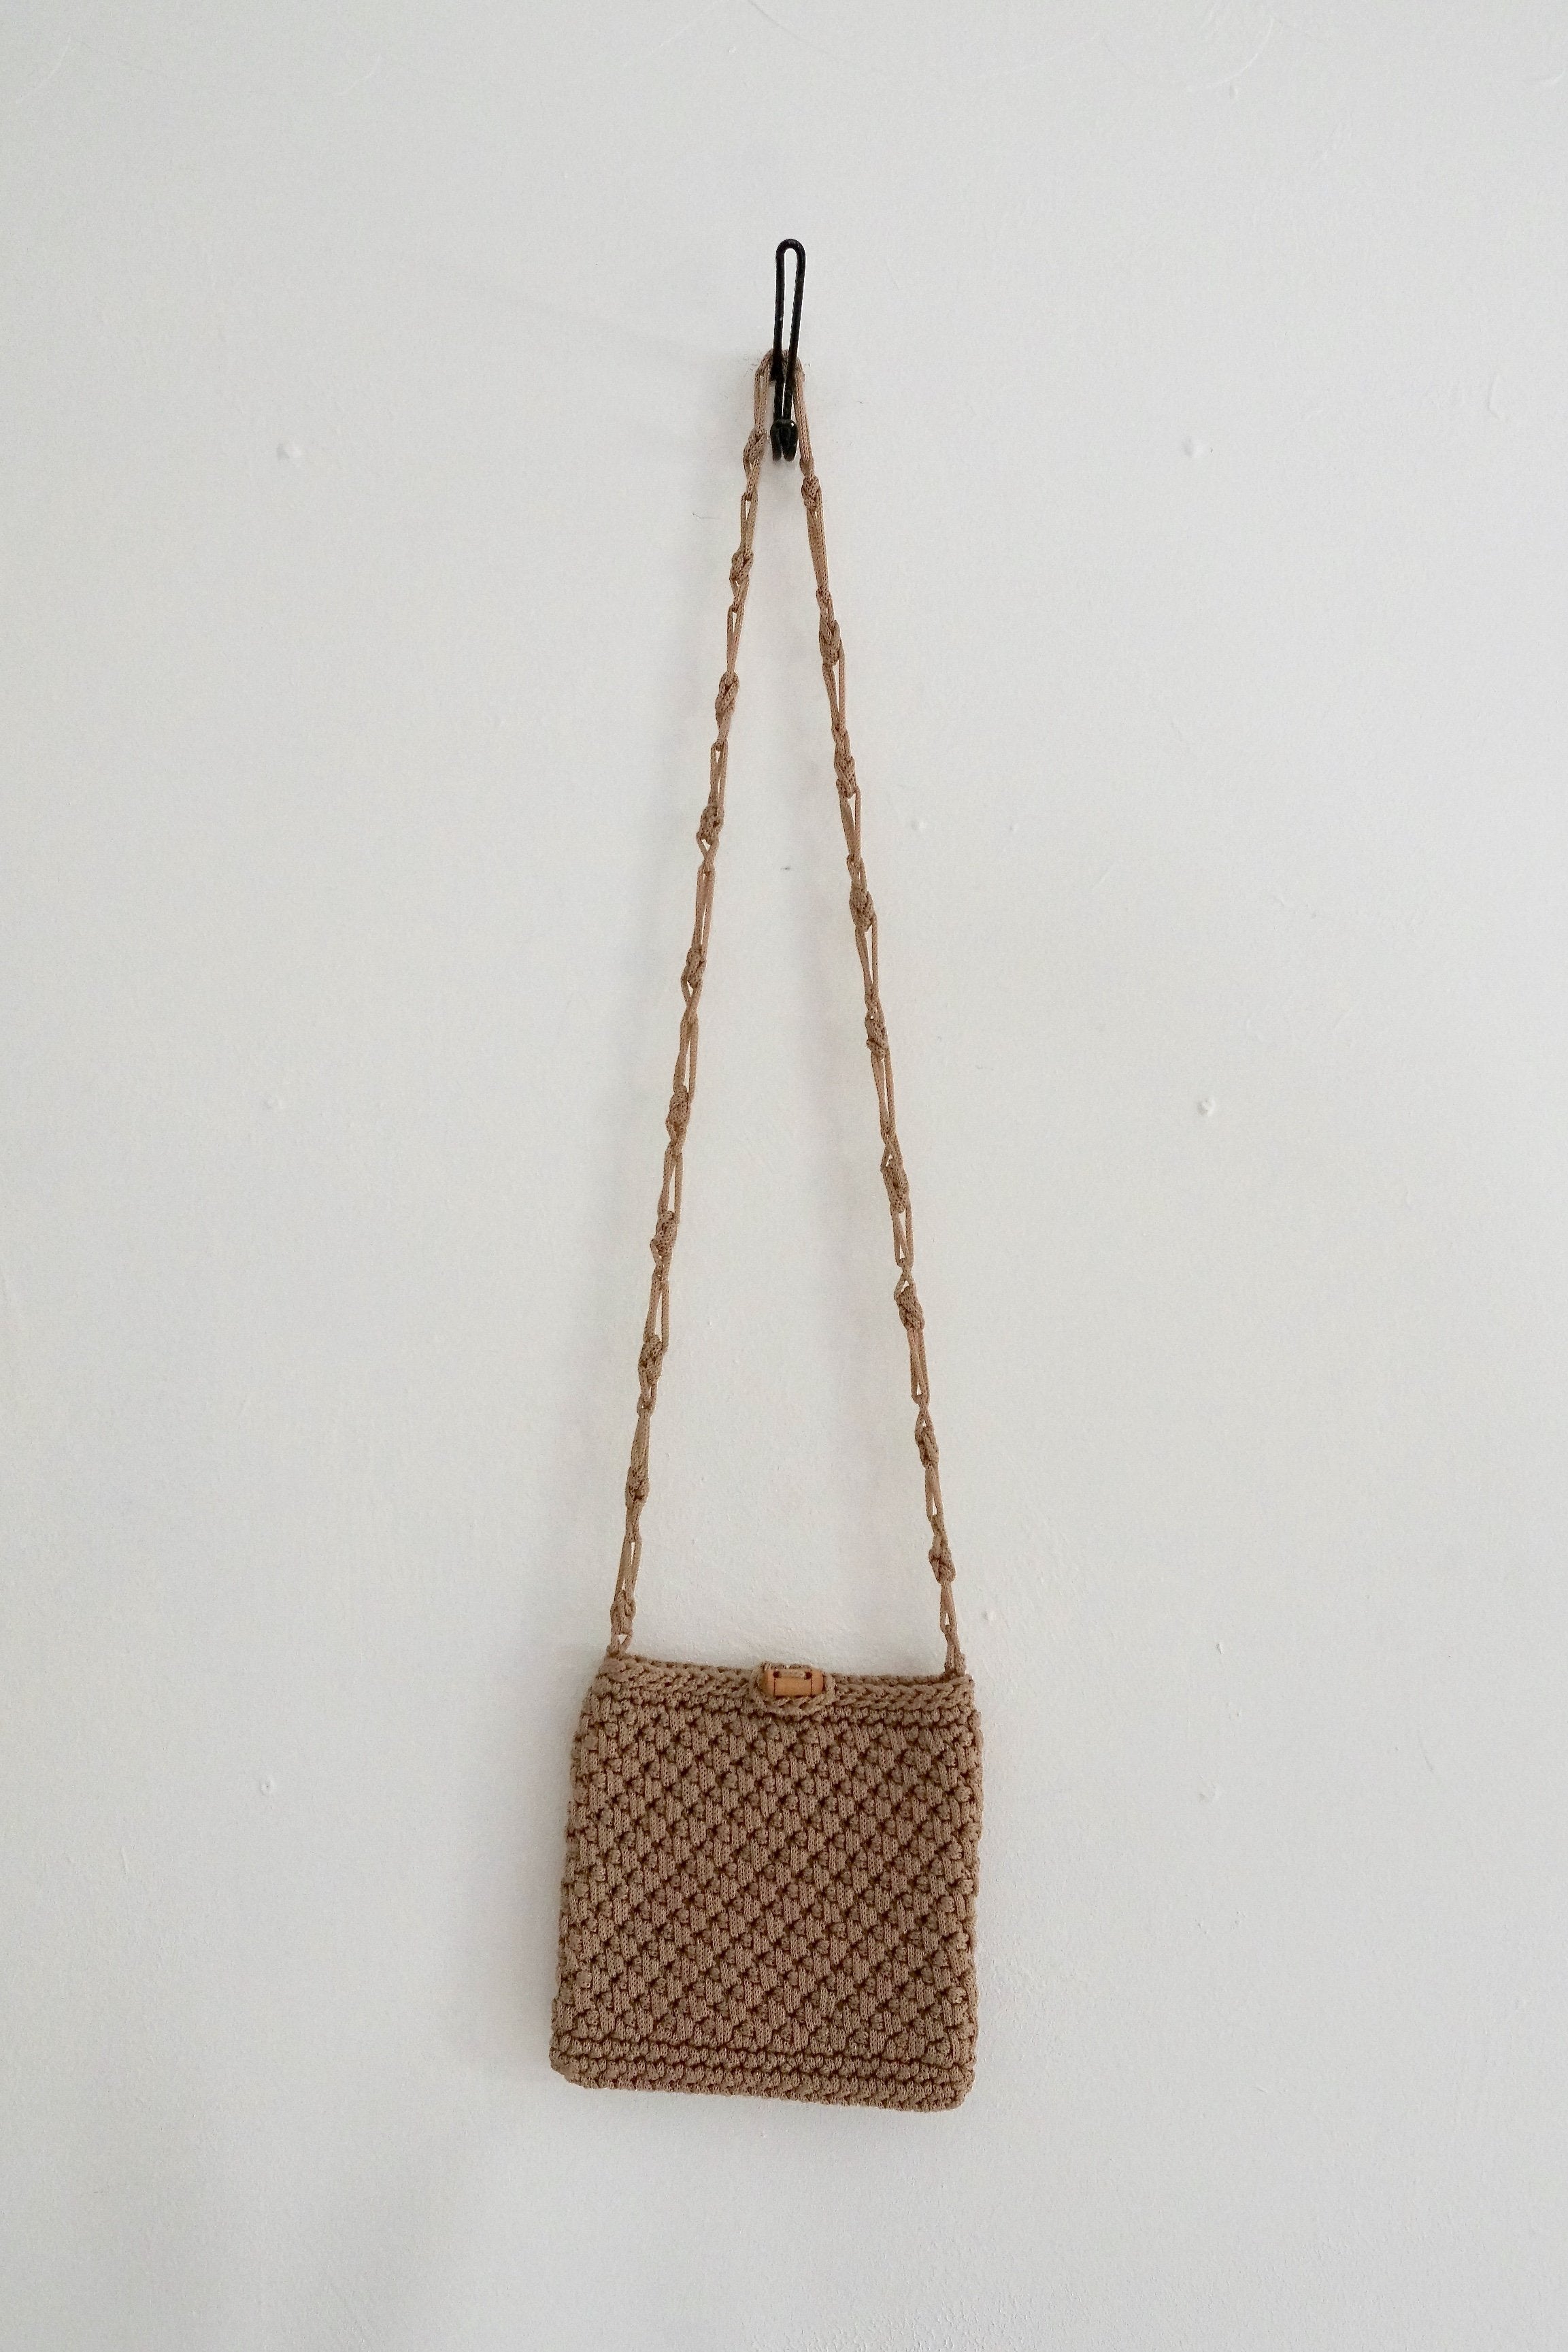 Princess Pretty Purses 1970s Macrame Bags Design Handbag - Etsy | Macrame  purse, Purse patterns, Macrame bag